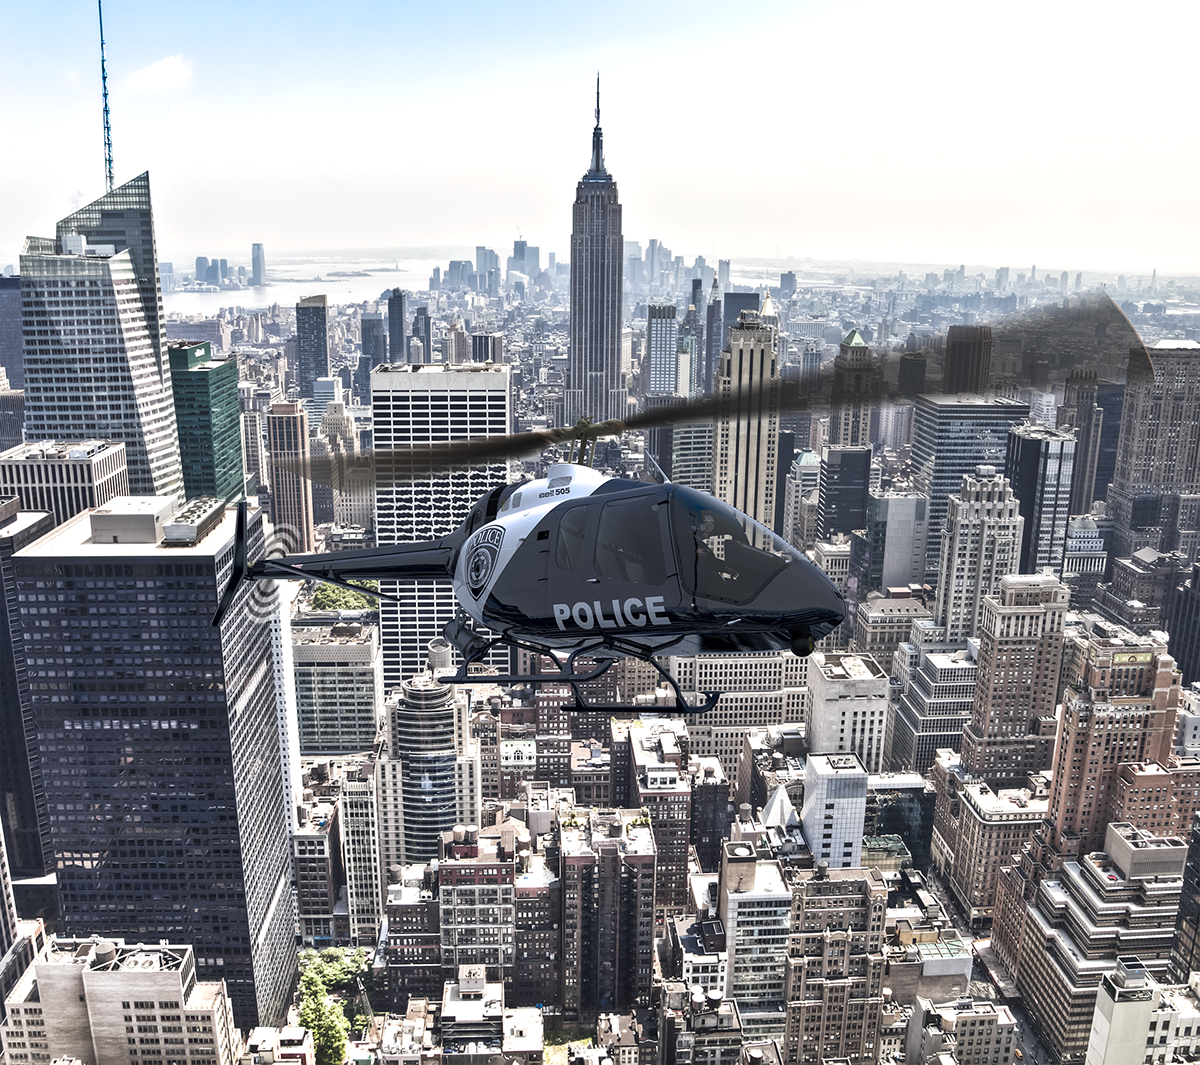 helicopter 3d studio concept design